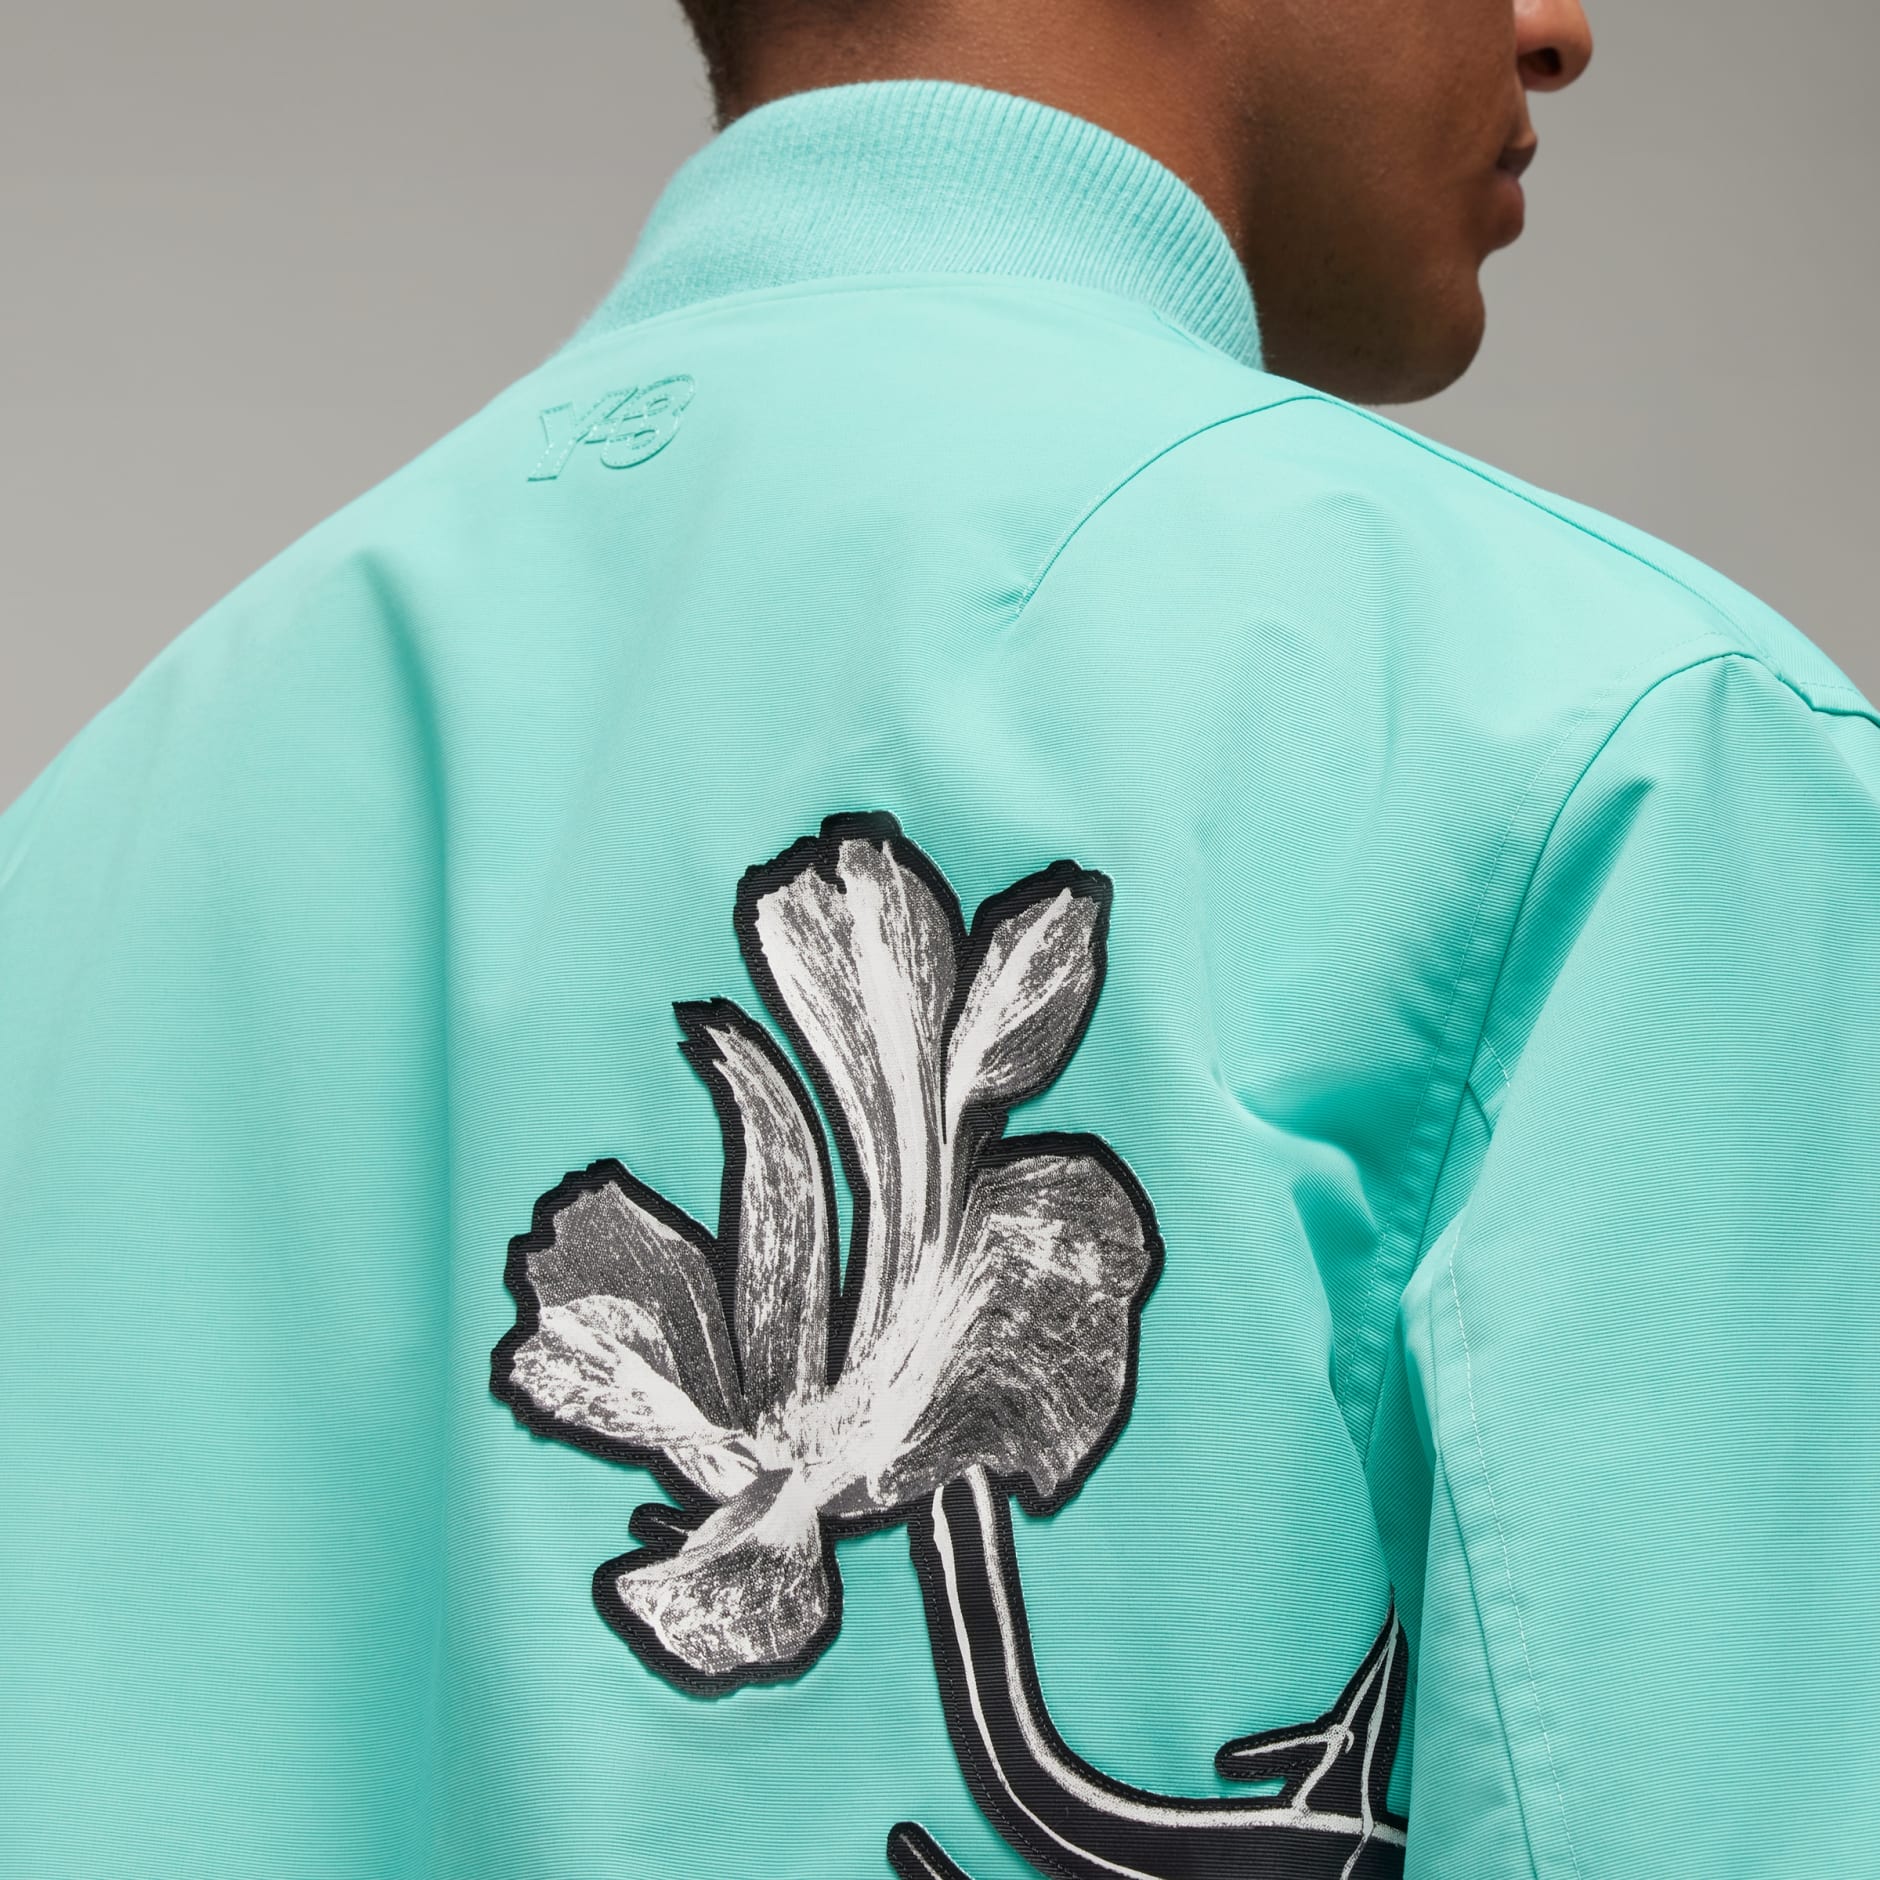 Clothing - Y-3 Team Jacket - Turquoise | adidas Oman